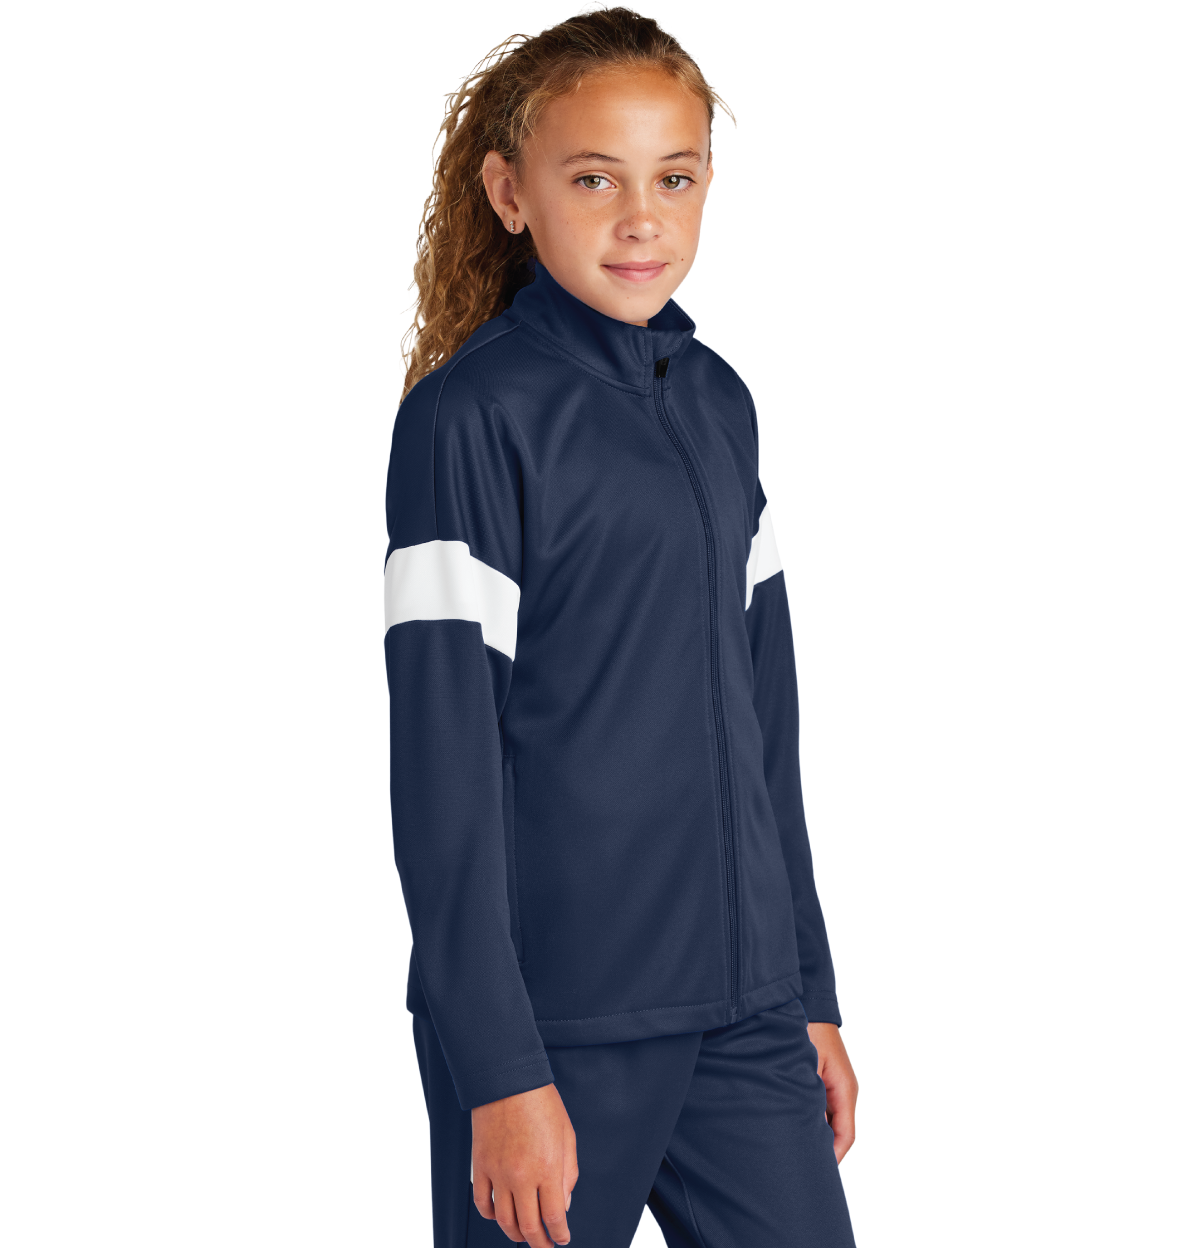 Full Zip Youth Jacket Sport-Tek: Simsbury Soccer Club